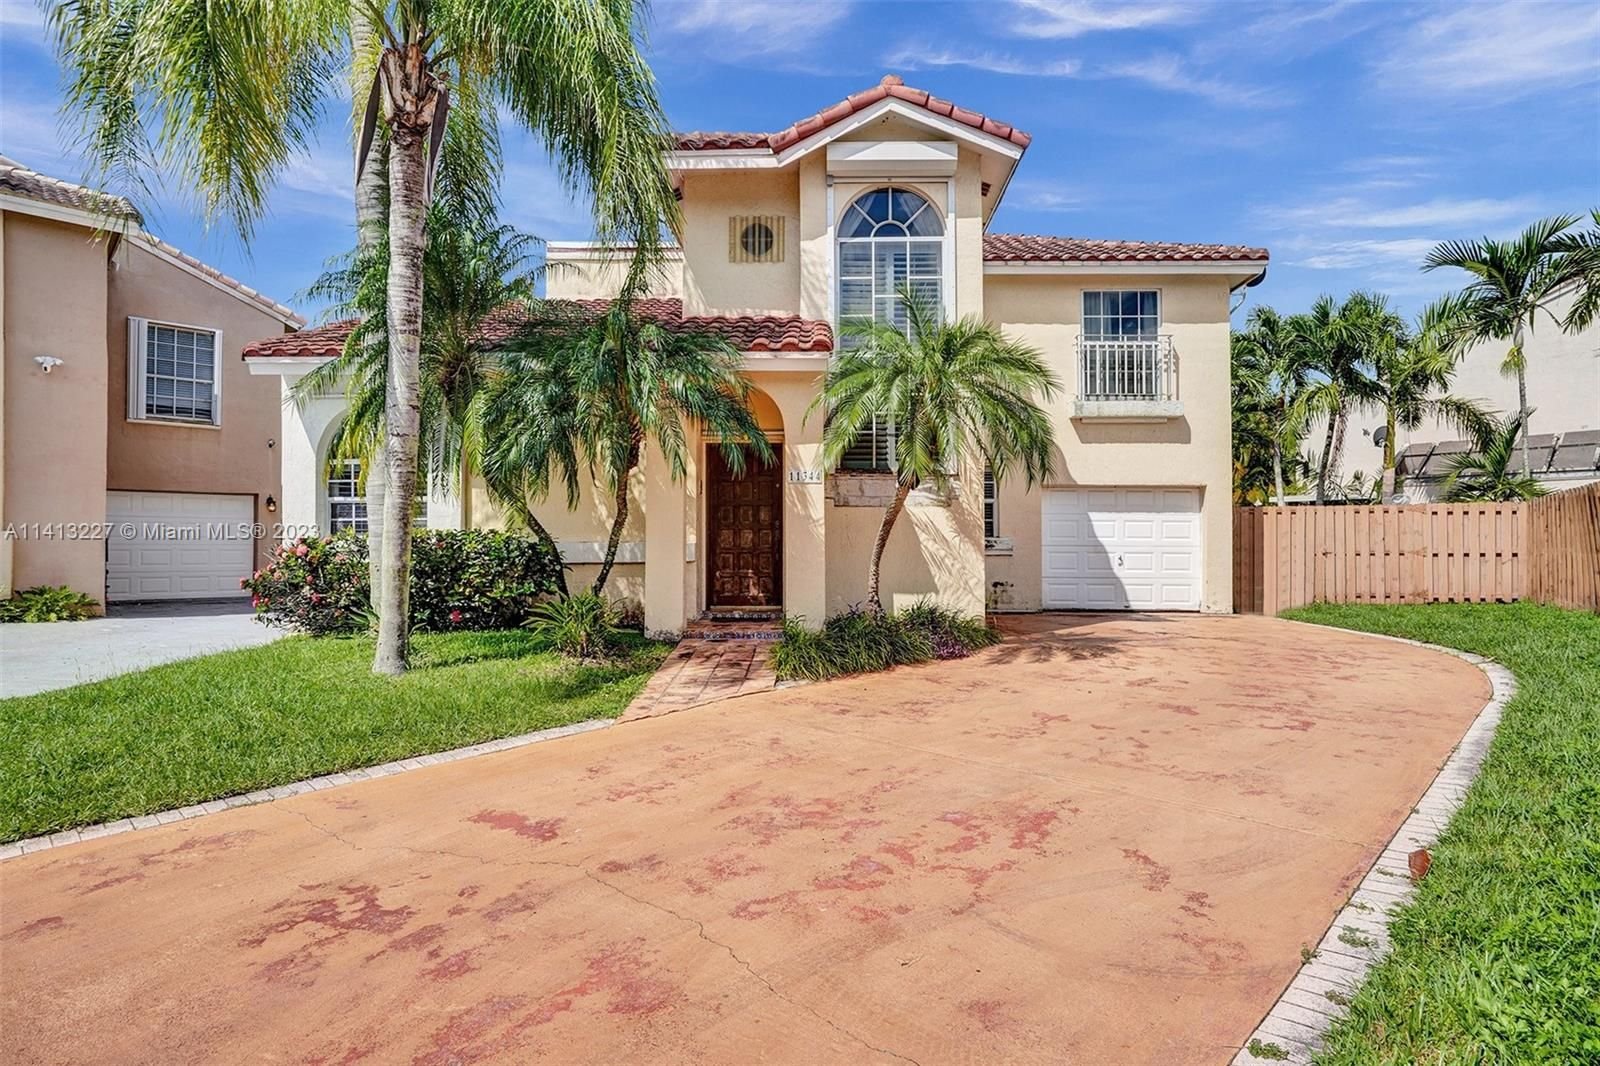 Real estate property located at 11344 157th Pl, Miami-Dade County, Miami, FL